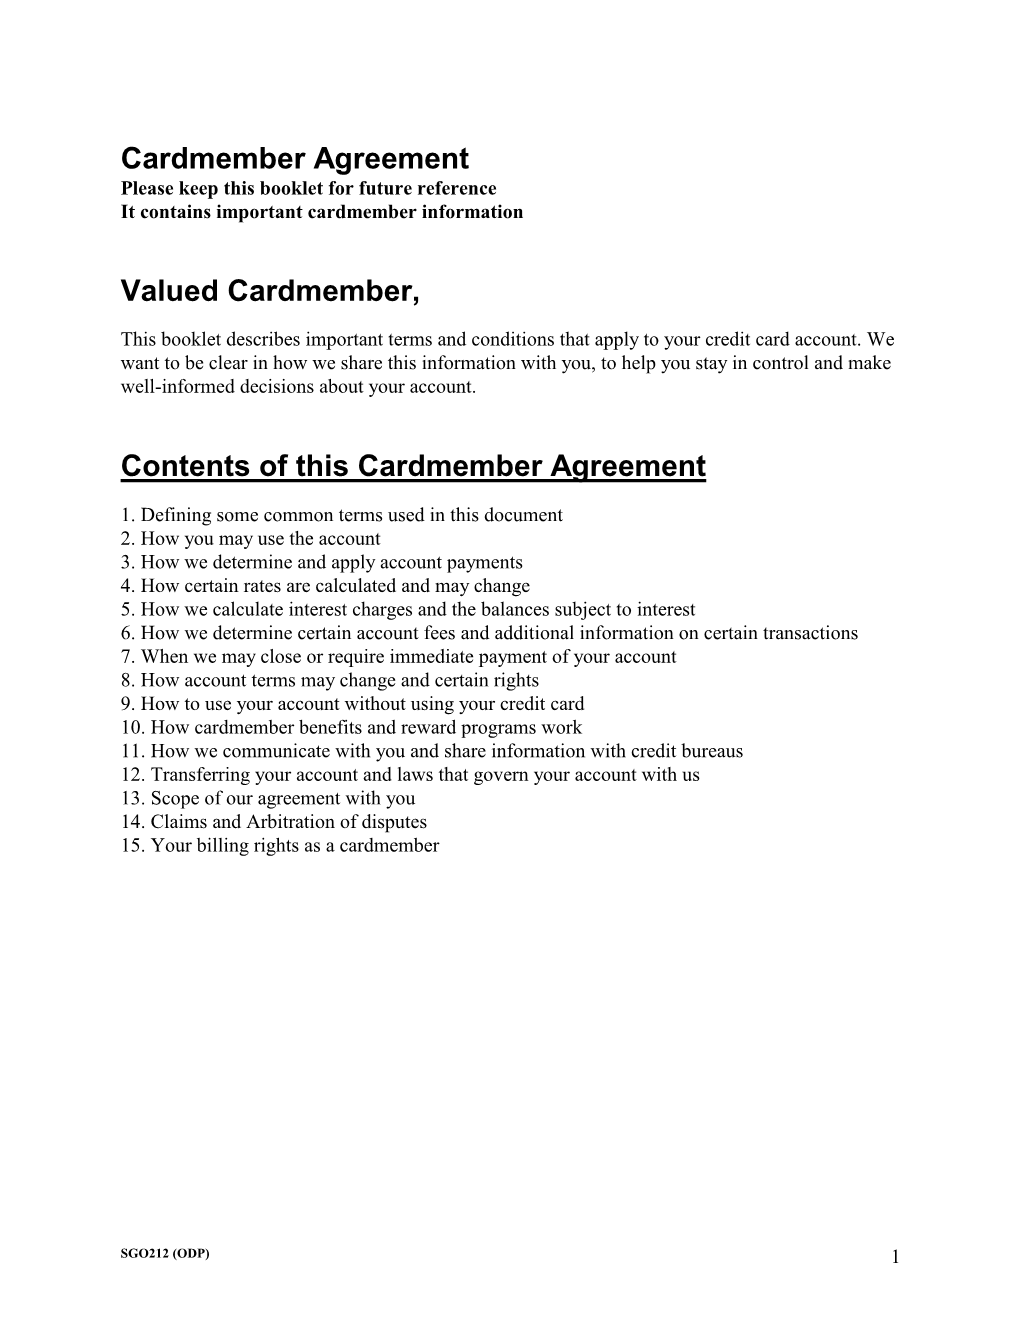 Cardmember Agreement Valued Cardmember